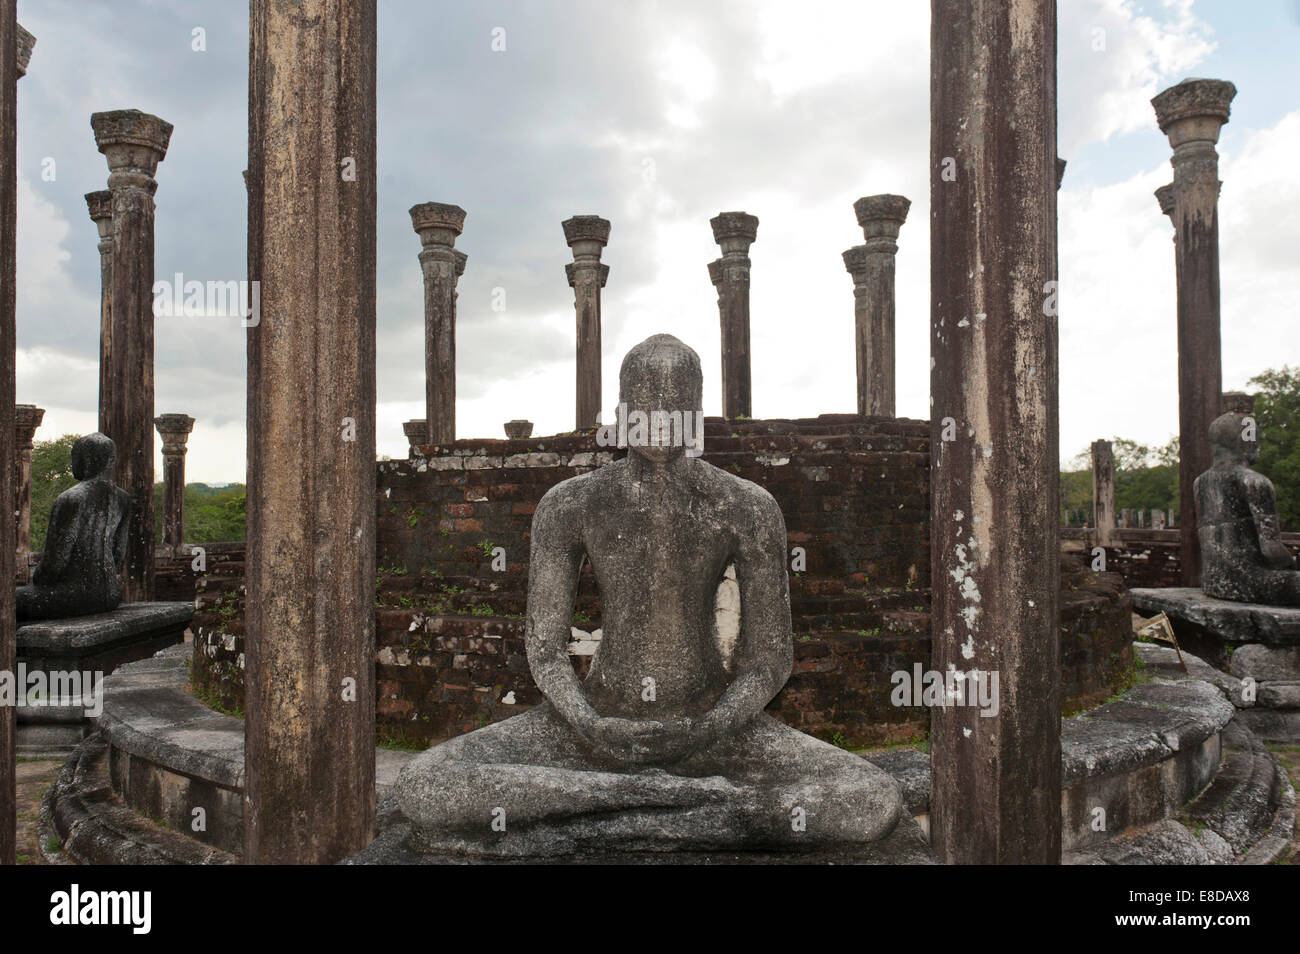 Buddha statue in a ruined temple, Temple of Medirigiriya, Medirigiriya, Sri Lanka Stock Photo